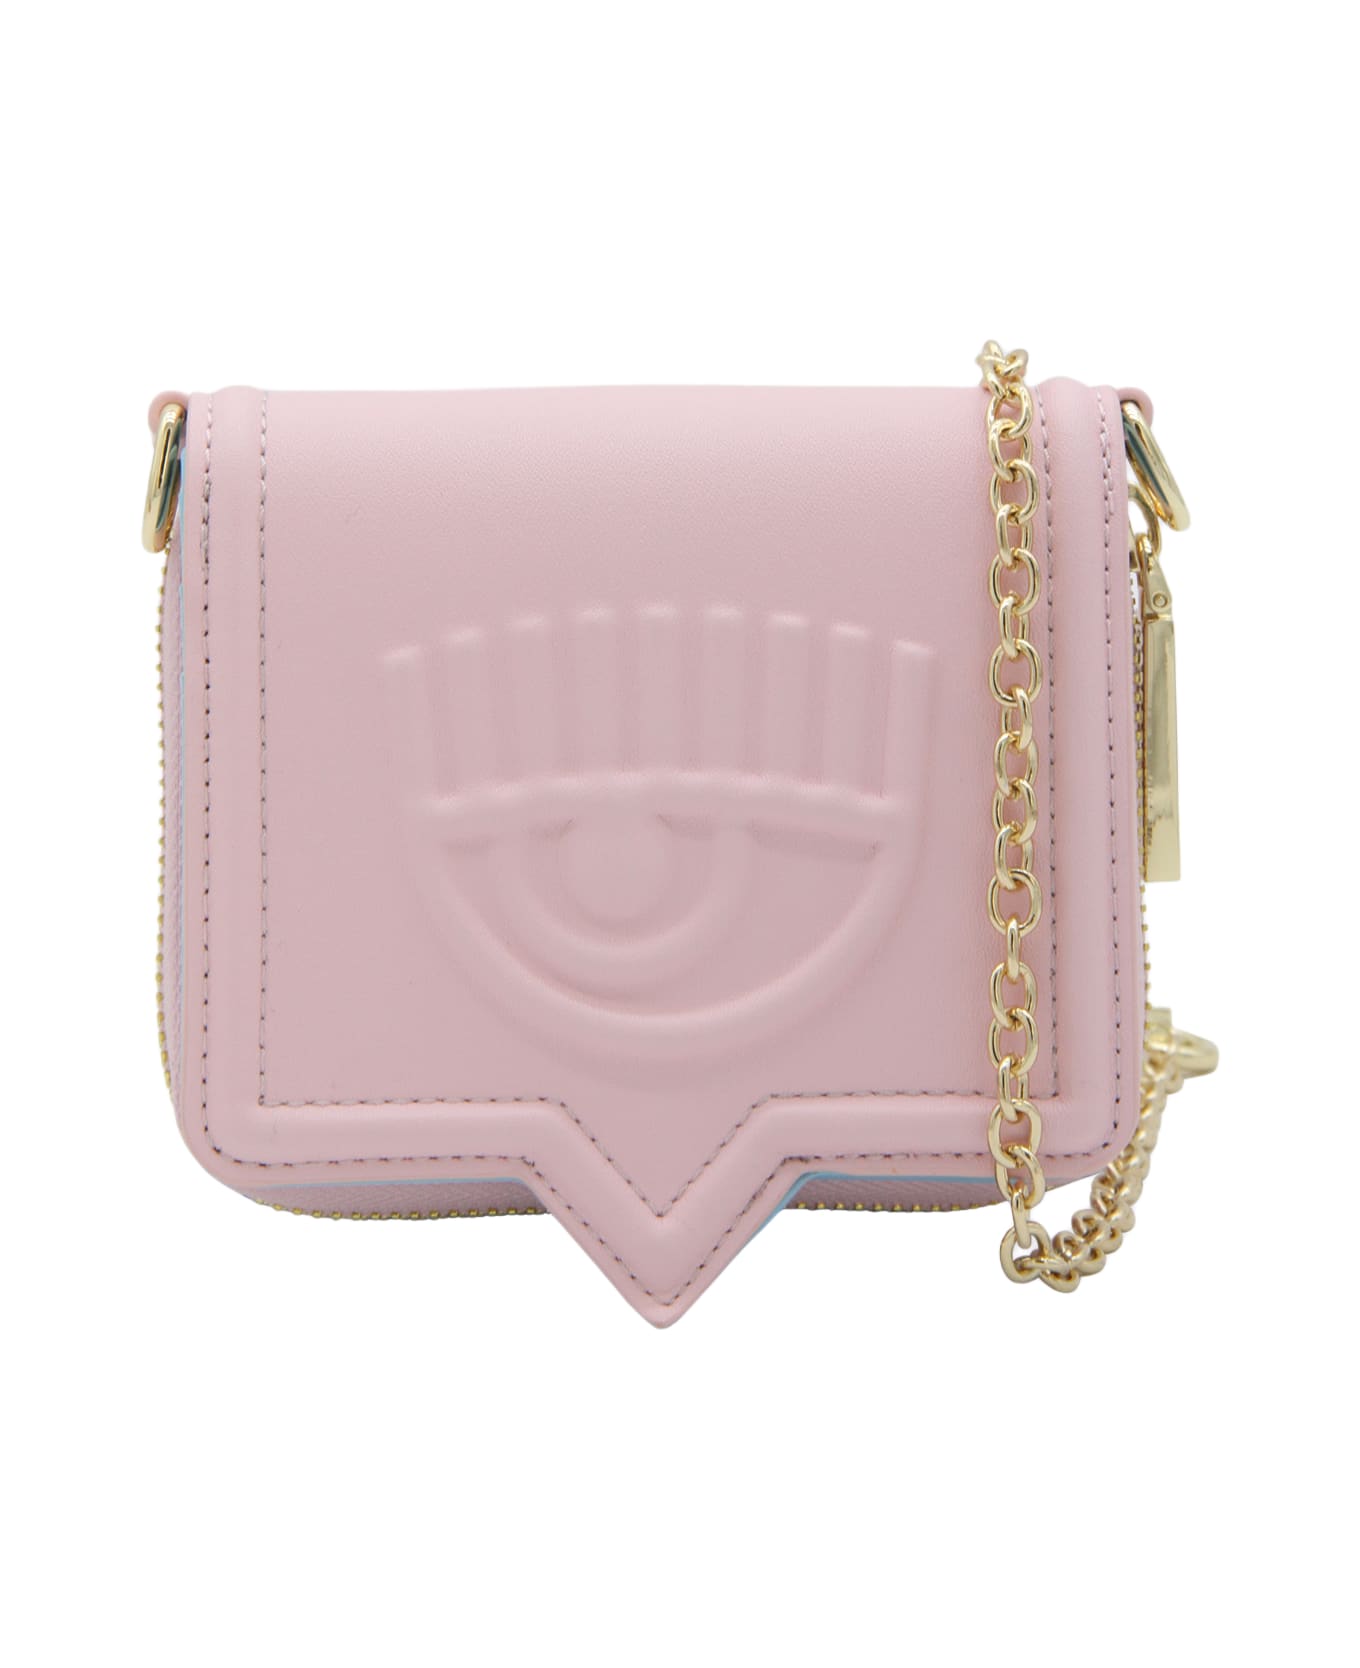 Chiara Ferragni Pink Crossbody Bag - FAIRY TALE ショルダーバッグ